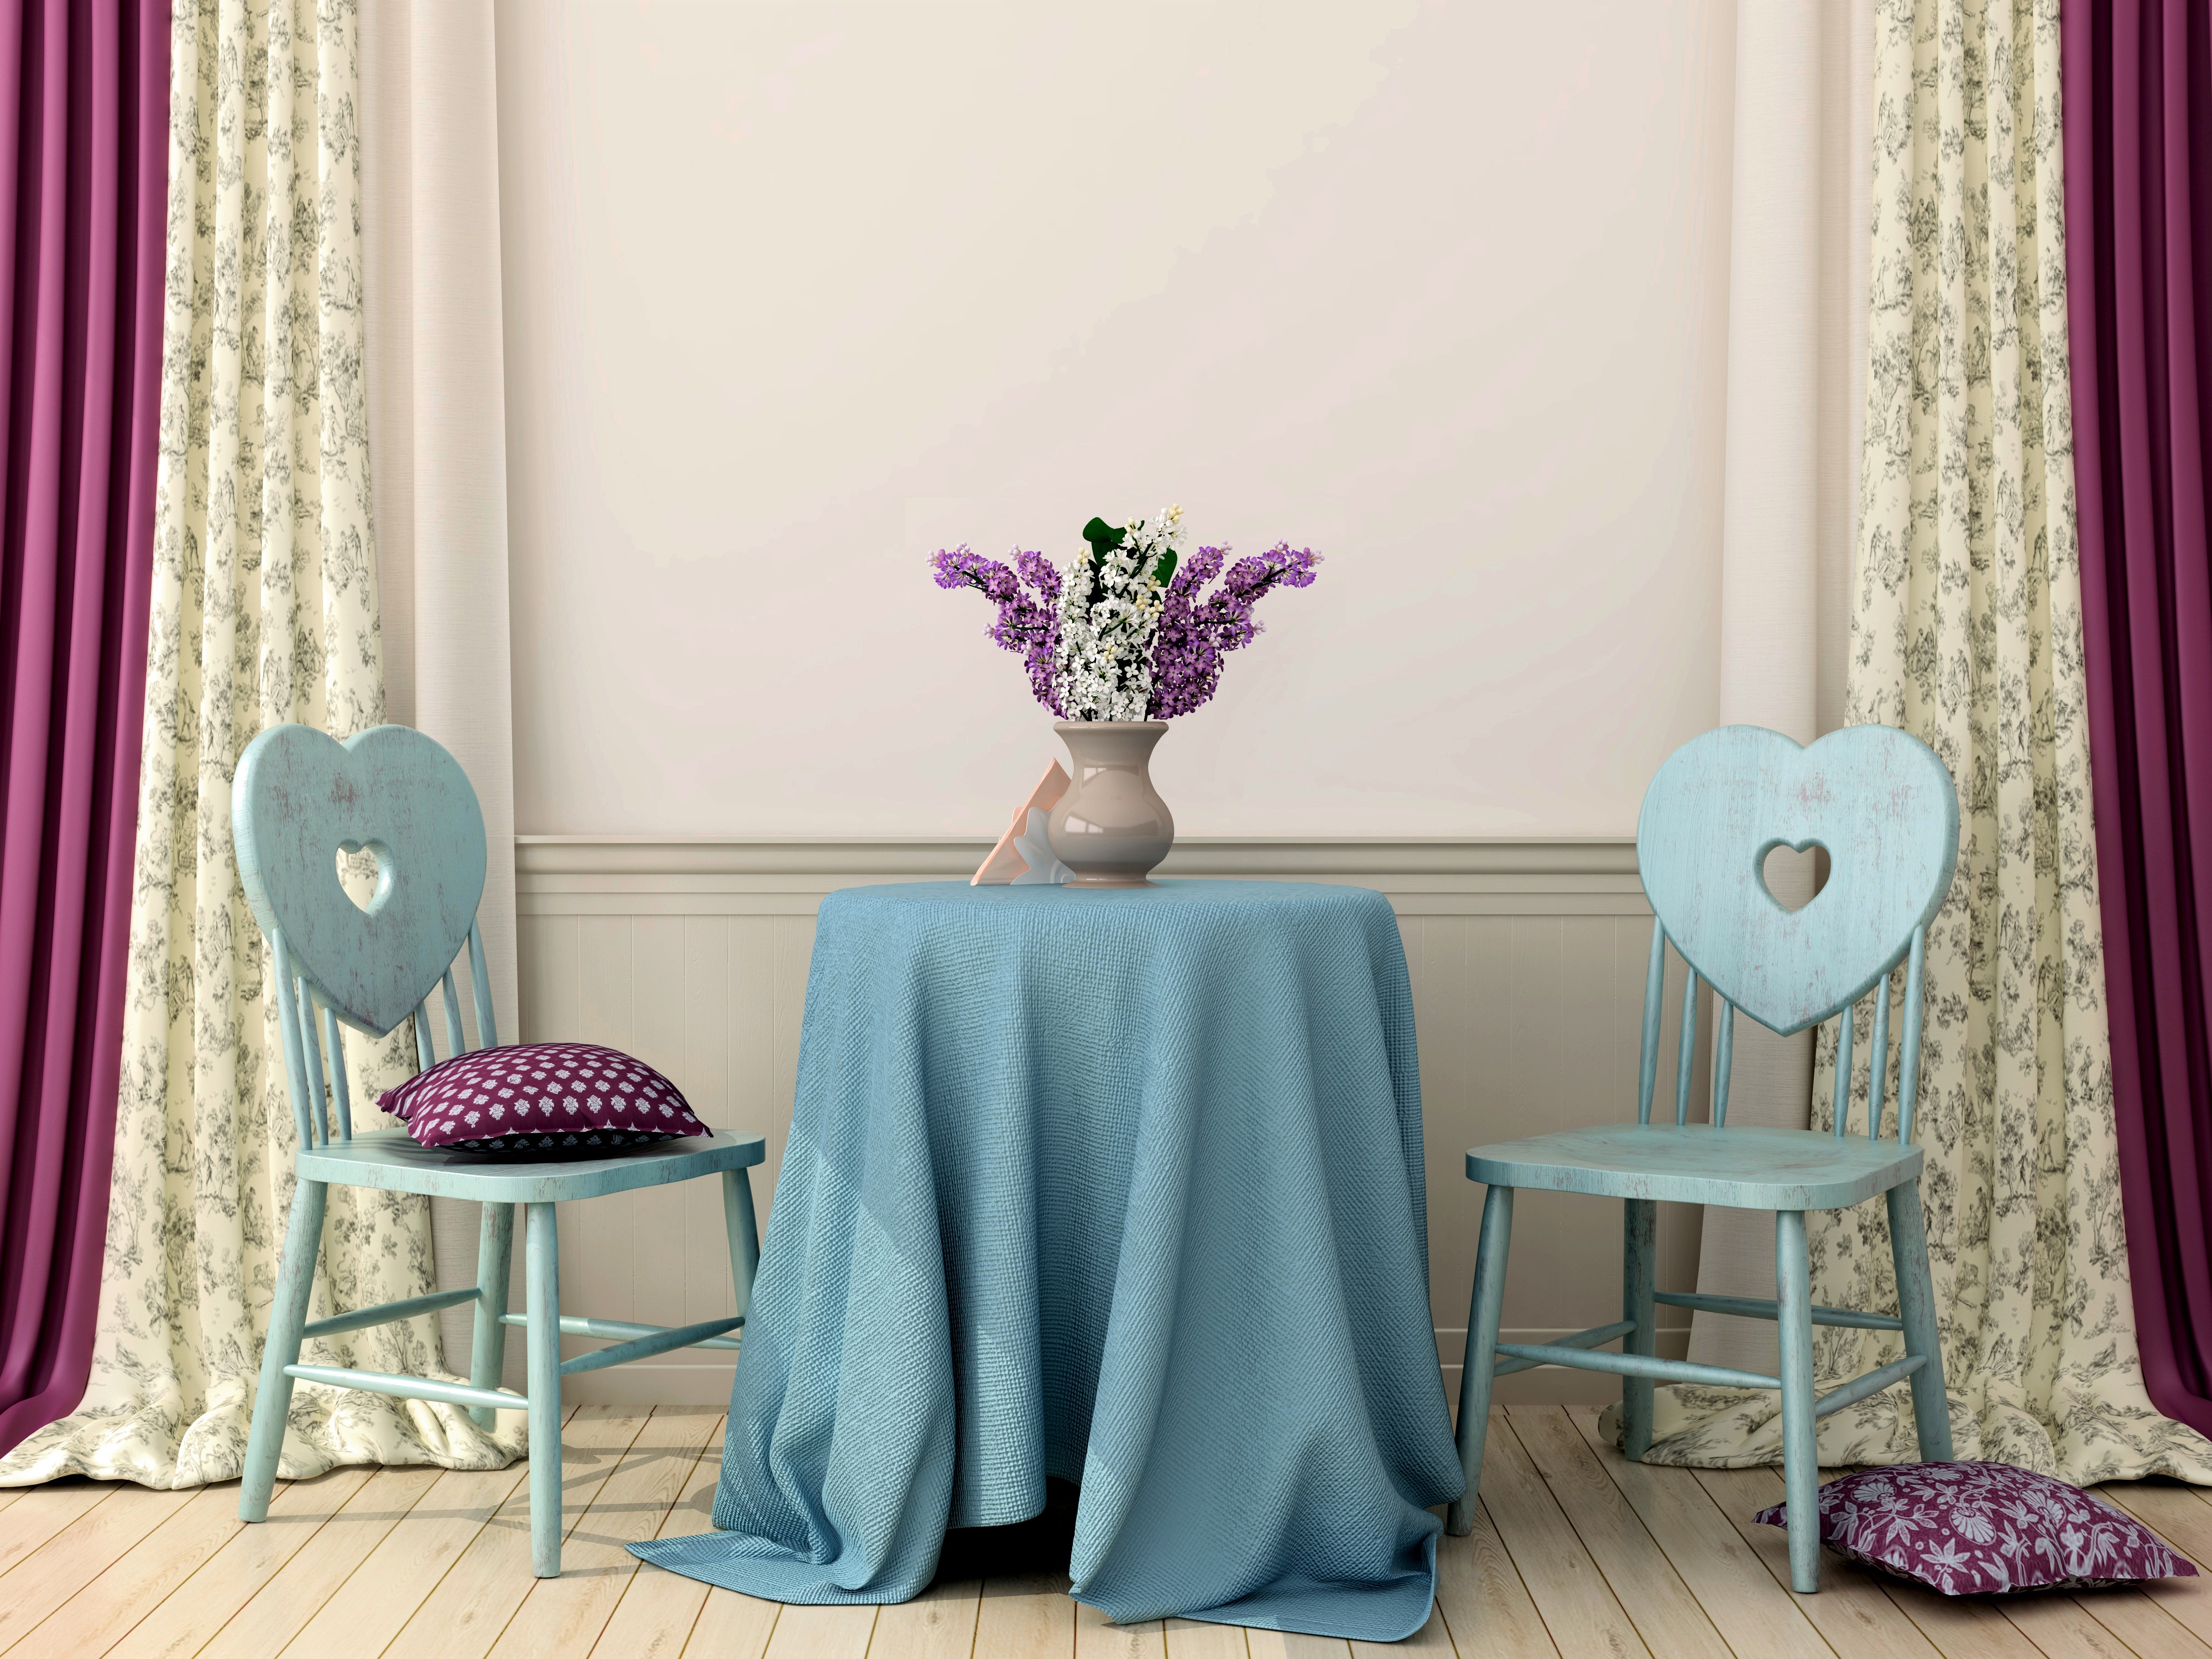 photography, still life, chair, cushion, heart, interior, lilac, room, table, vase